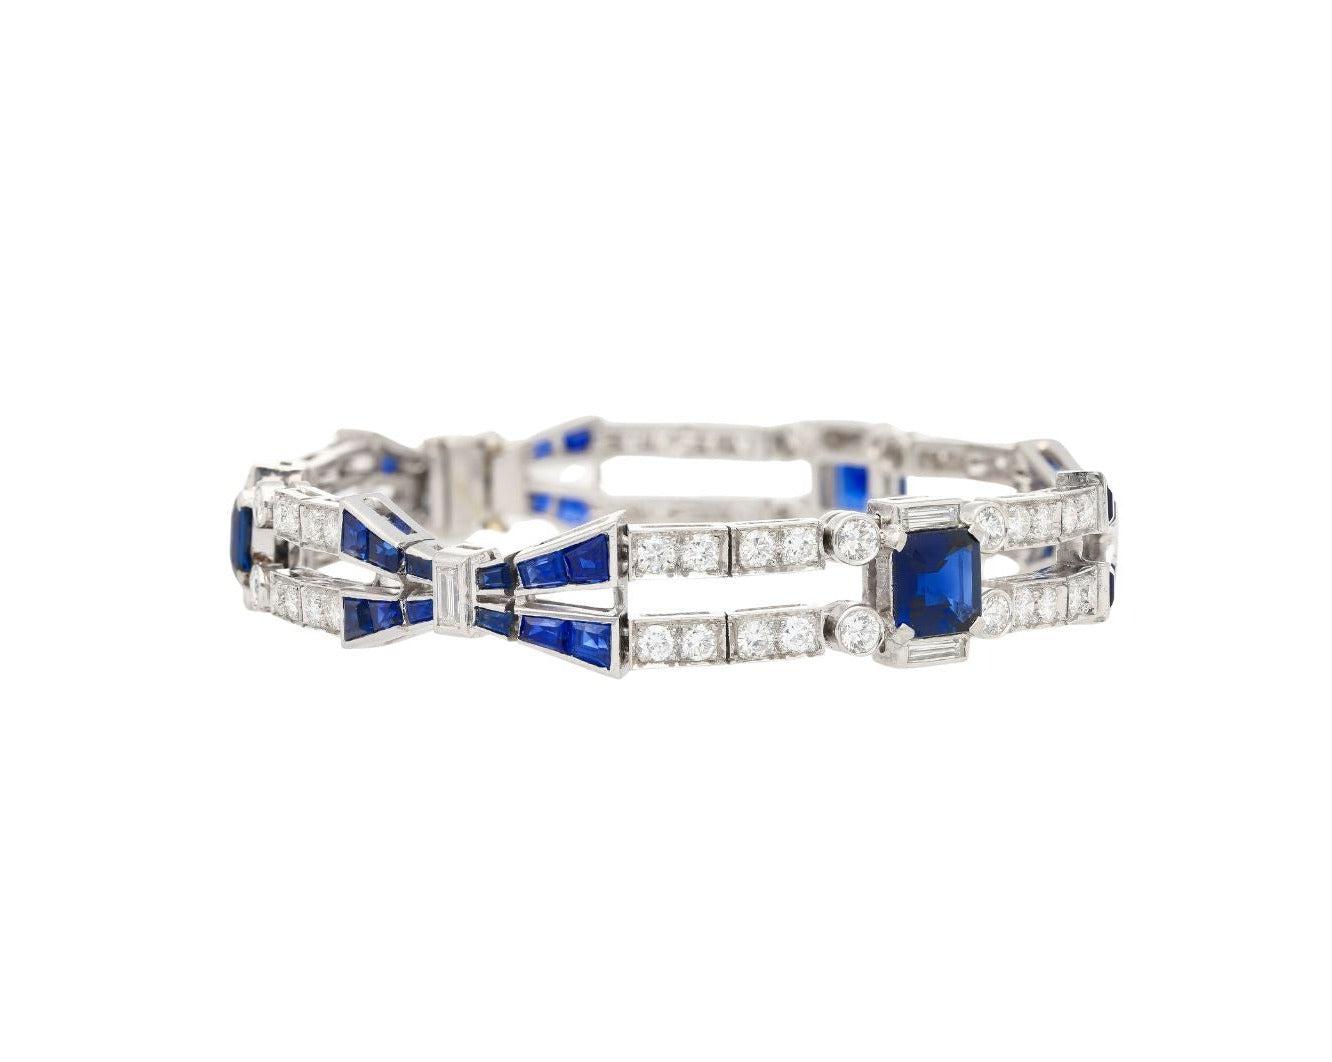 Vintage 12 Carat Blue Sapphire and Diamond Art Deco Open Bracelet in Platinum